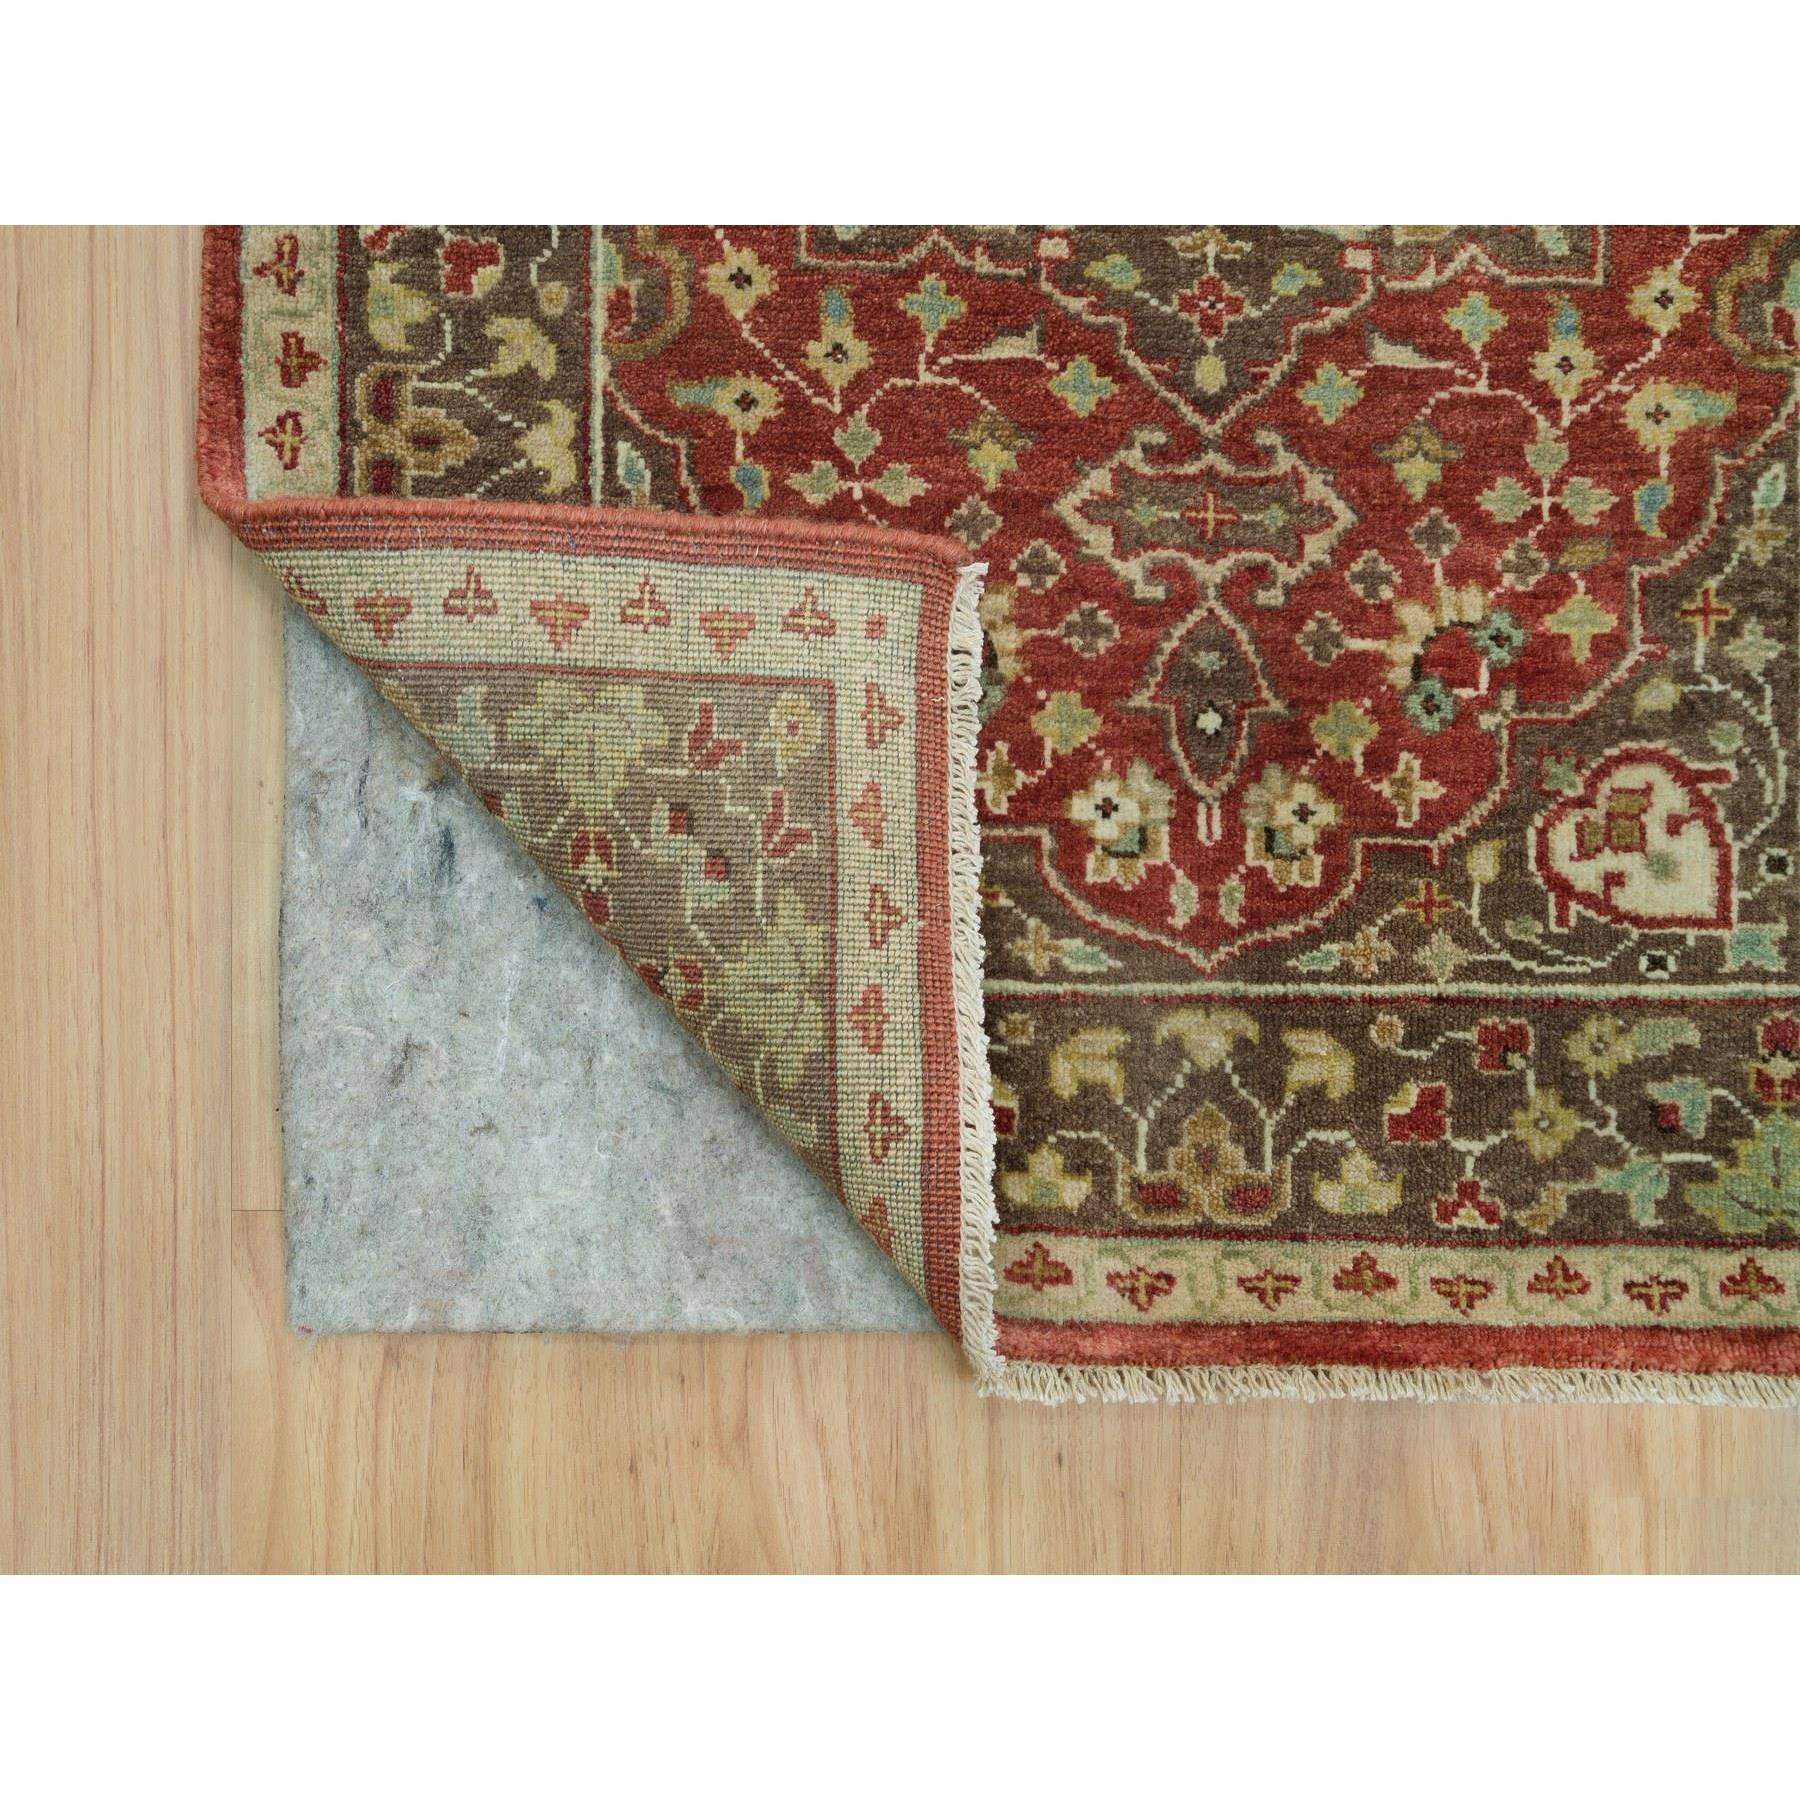 2'8"x16' Turkey Red, Plush Pile, Antiqued Tabriz Haji Jalili Design, Hand Woven, 100% Wool, Natural Dyes, Dense Weave, XL Runner Oriental Rug 